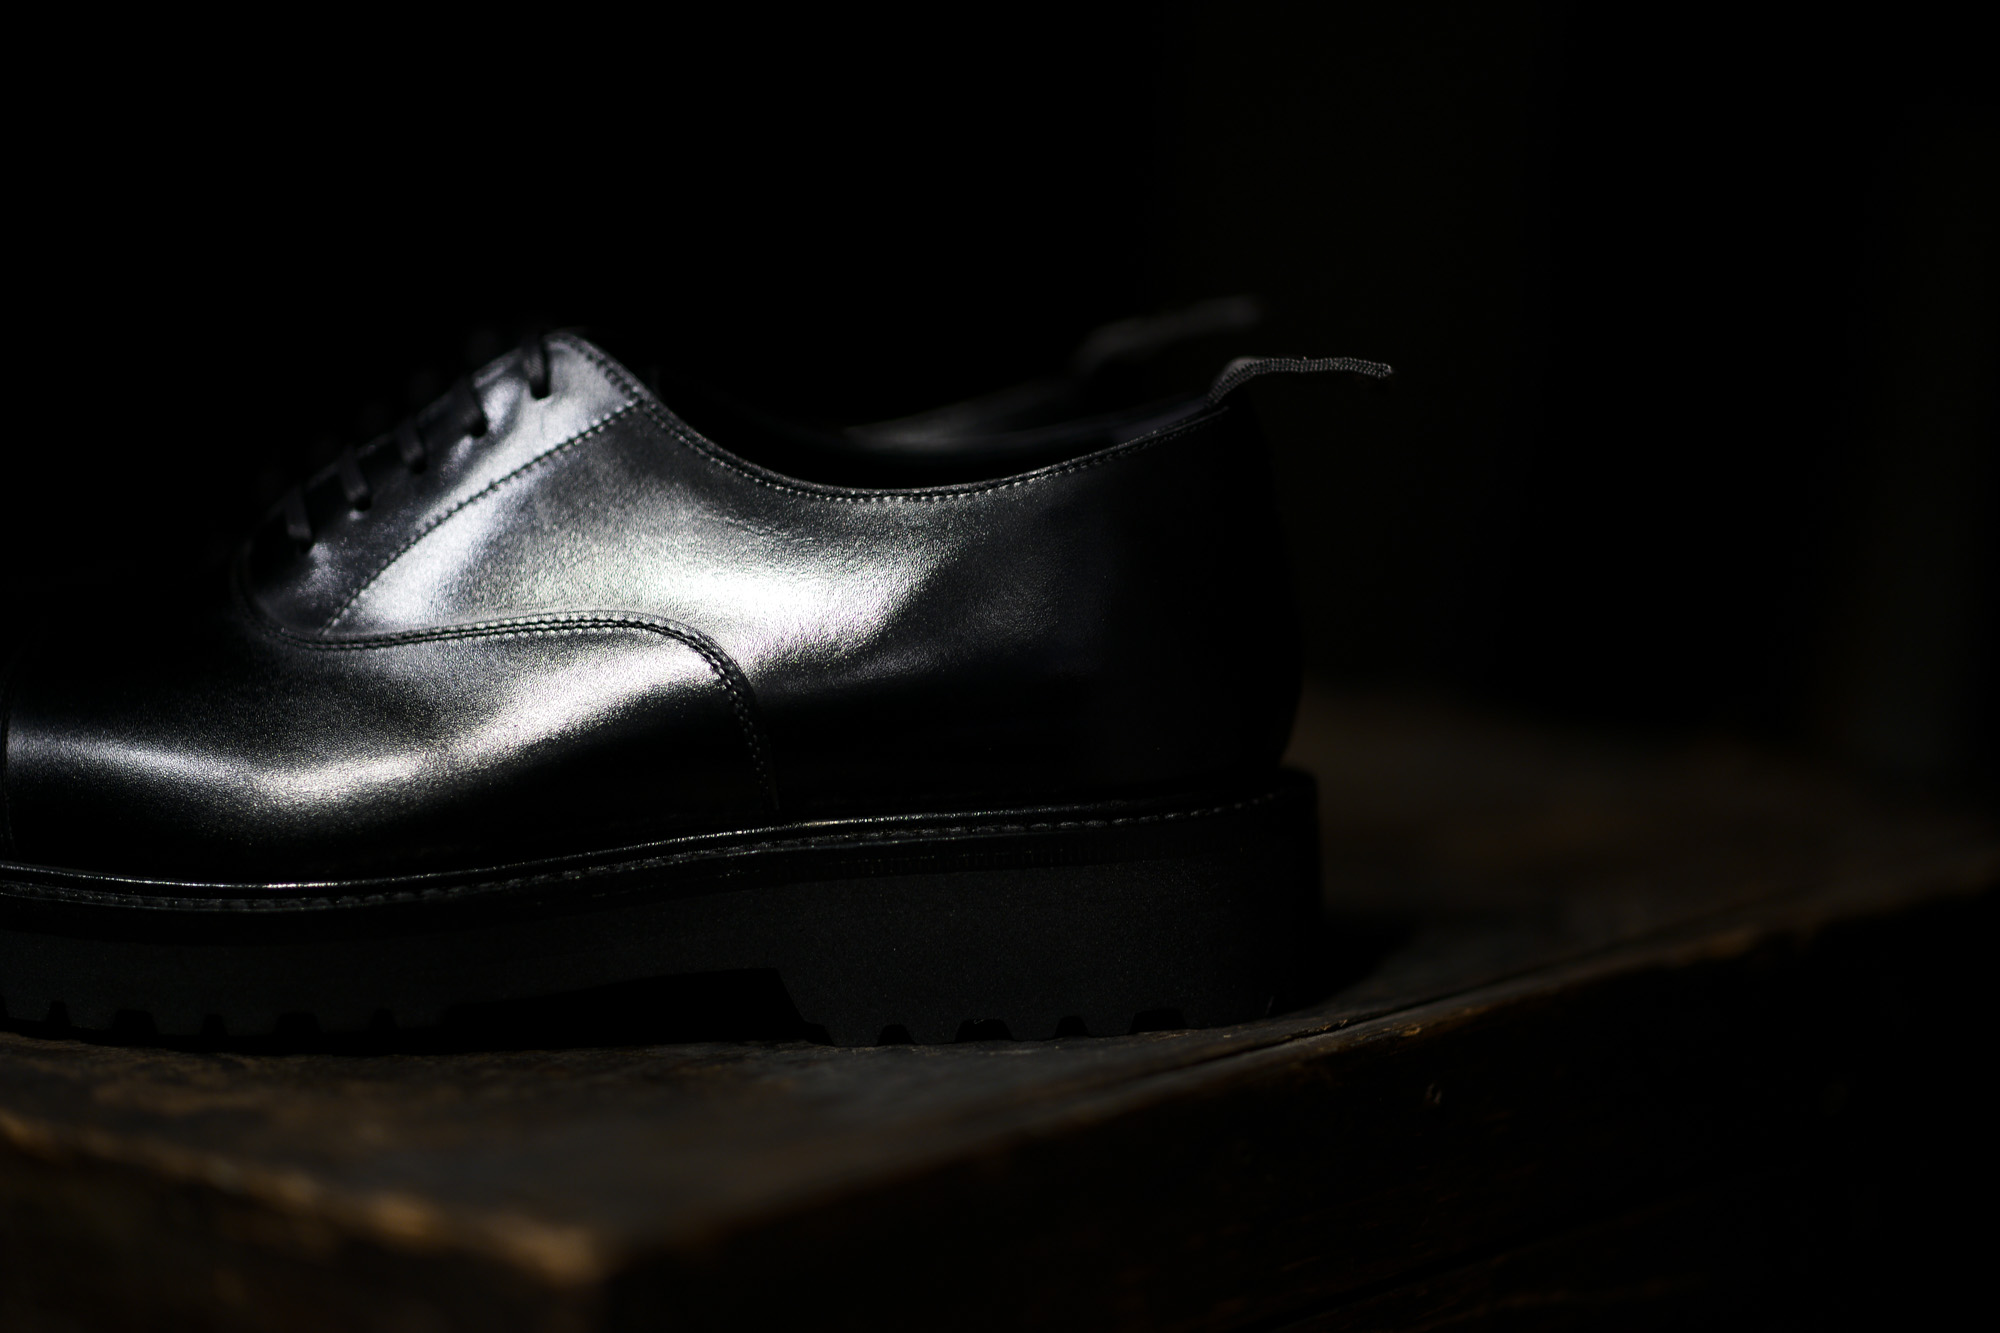 WH (ダブルエイチ) WHS-0110 Straight chip Shoes (干場氏 スペシャル モデル) Trench Last (トレンチラスト) ANNONAY Vocalou Calf Leather ストレートチップ シューズ BLACK (ブラック) MADE IN JAPAN(日本製) 2019 春夏新作【2019春夏フリー分発売中】 干場さん 干場スペシャル FORZASTYLE フォルザスタイル 愛知 名古屋 Alto e Diritto アルト エ デリット